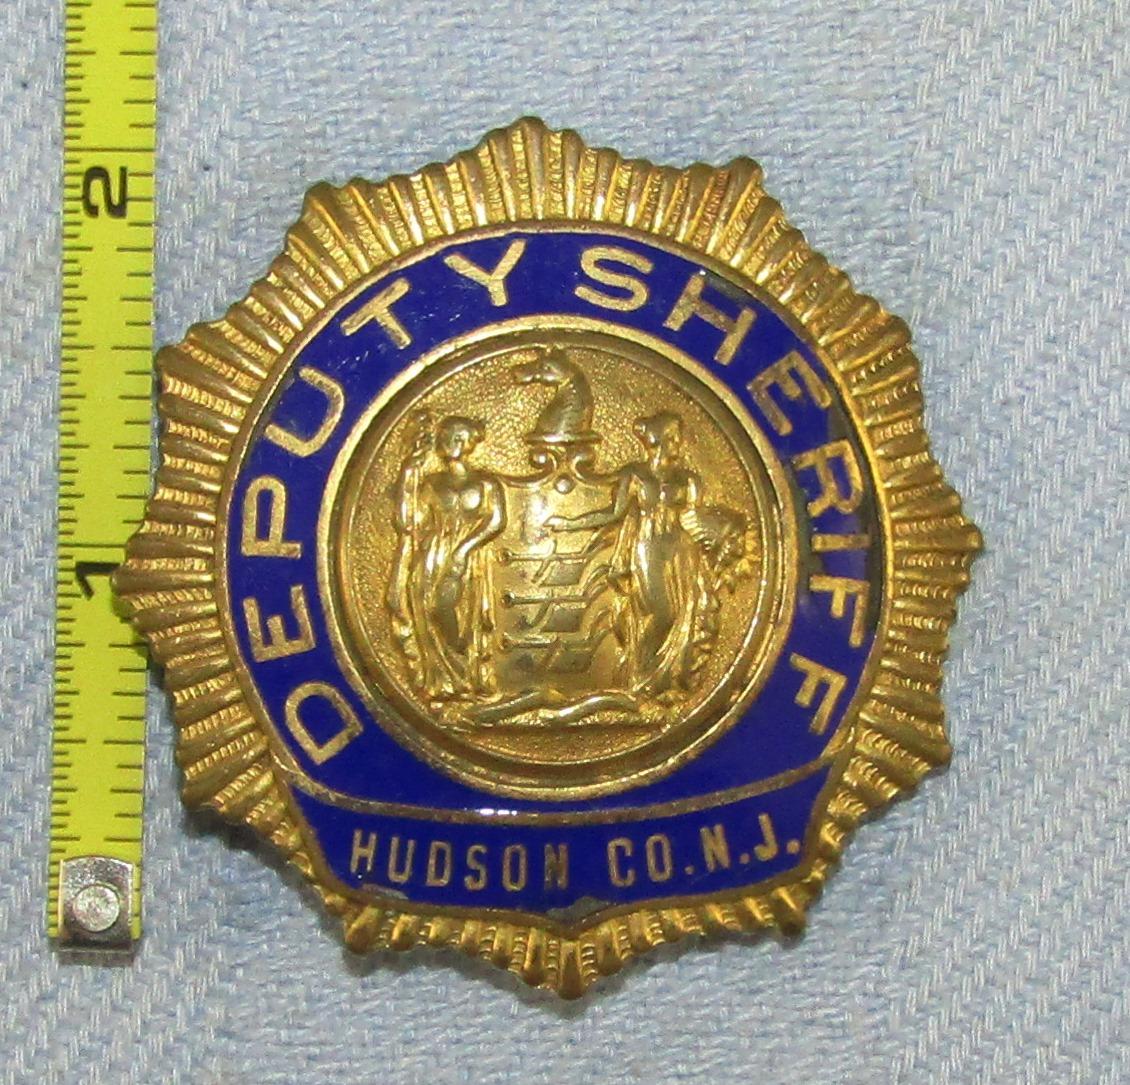 Scarce & Obsolete Vintage Hudson County, N.J. Deputy Sheriff Badge-Circa 1930-40's